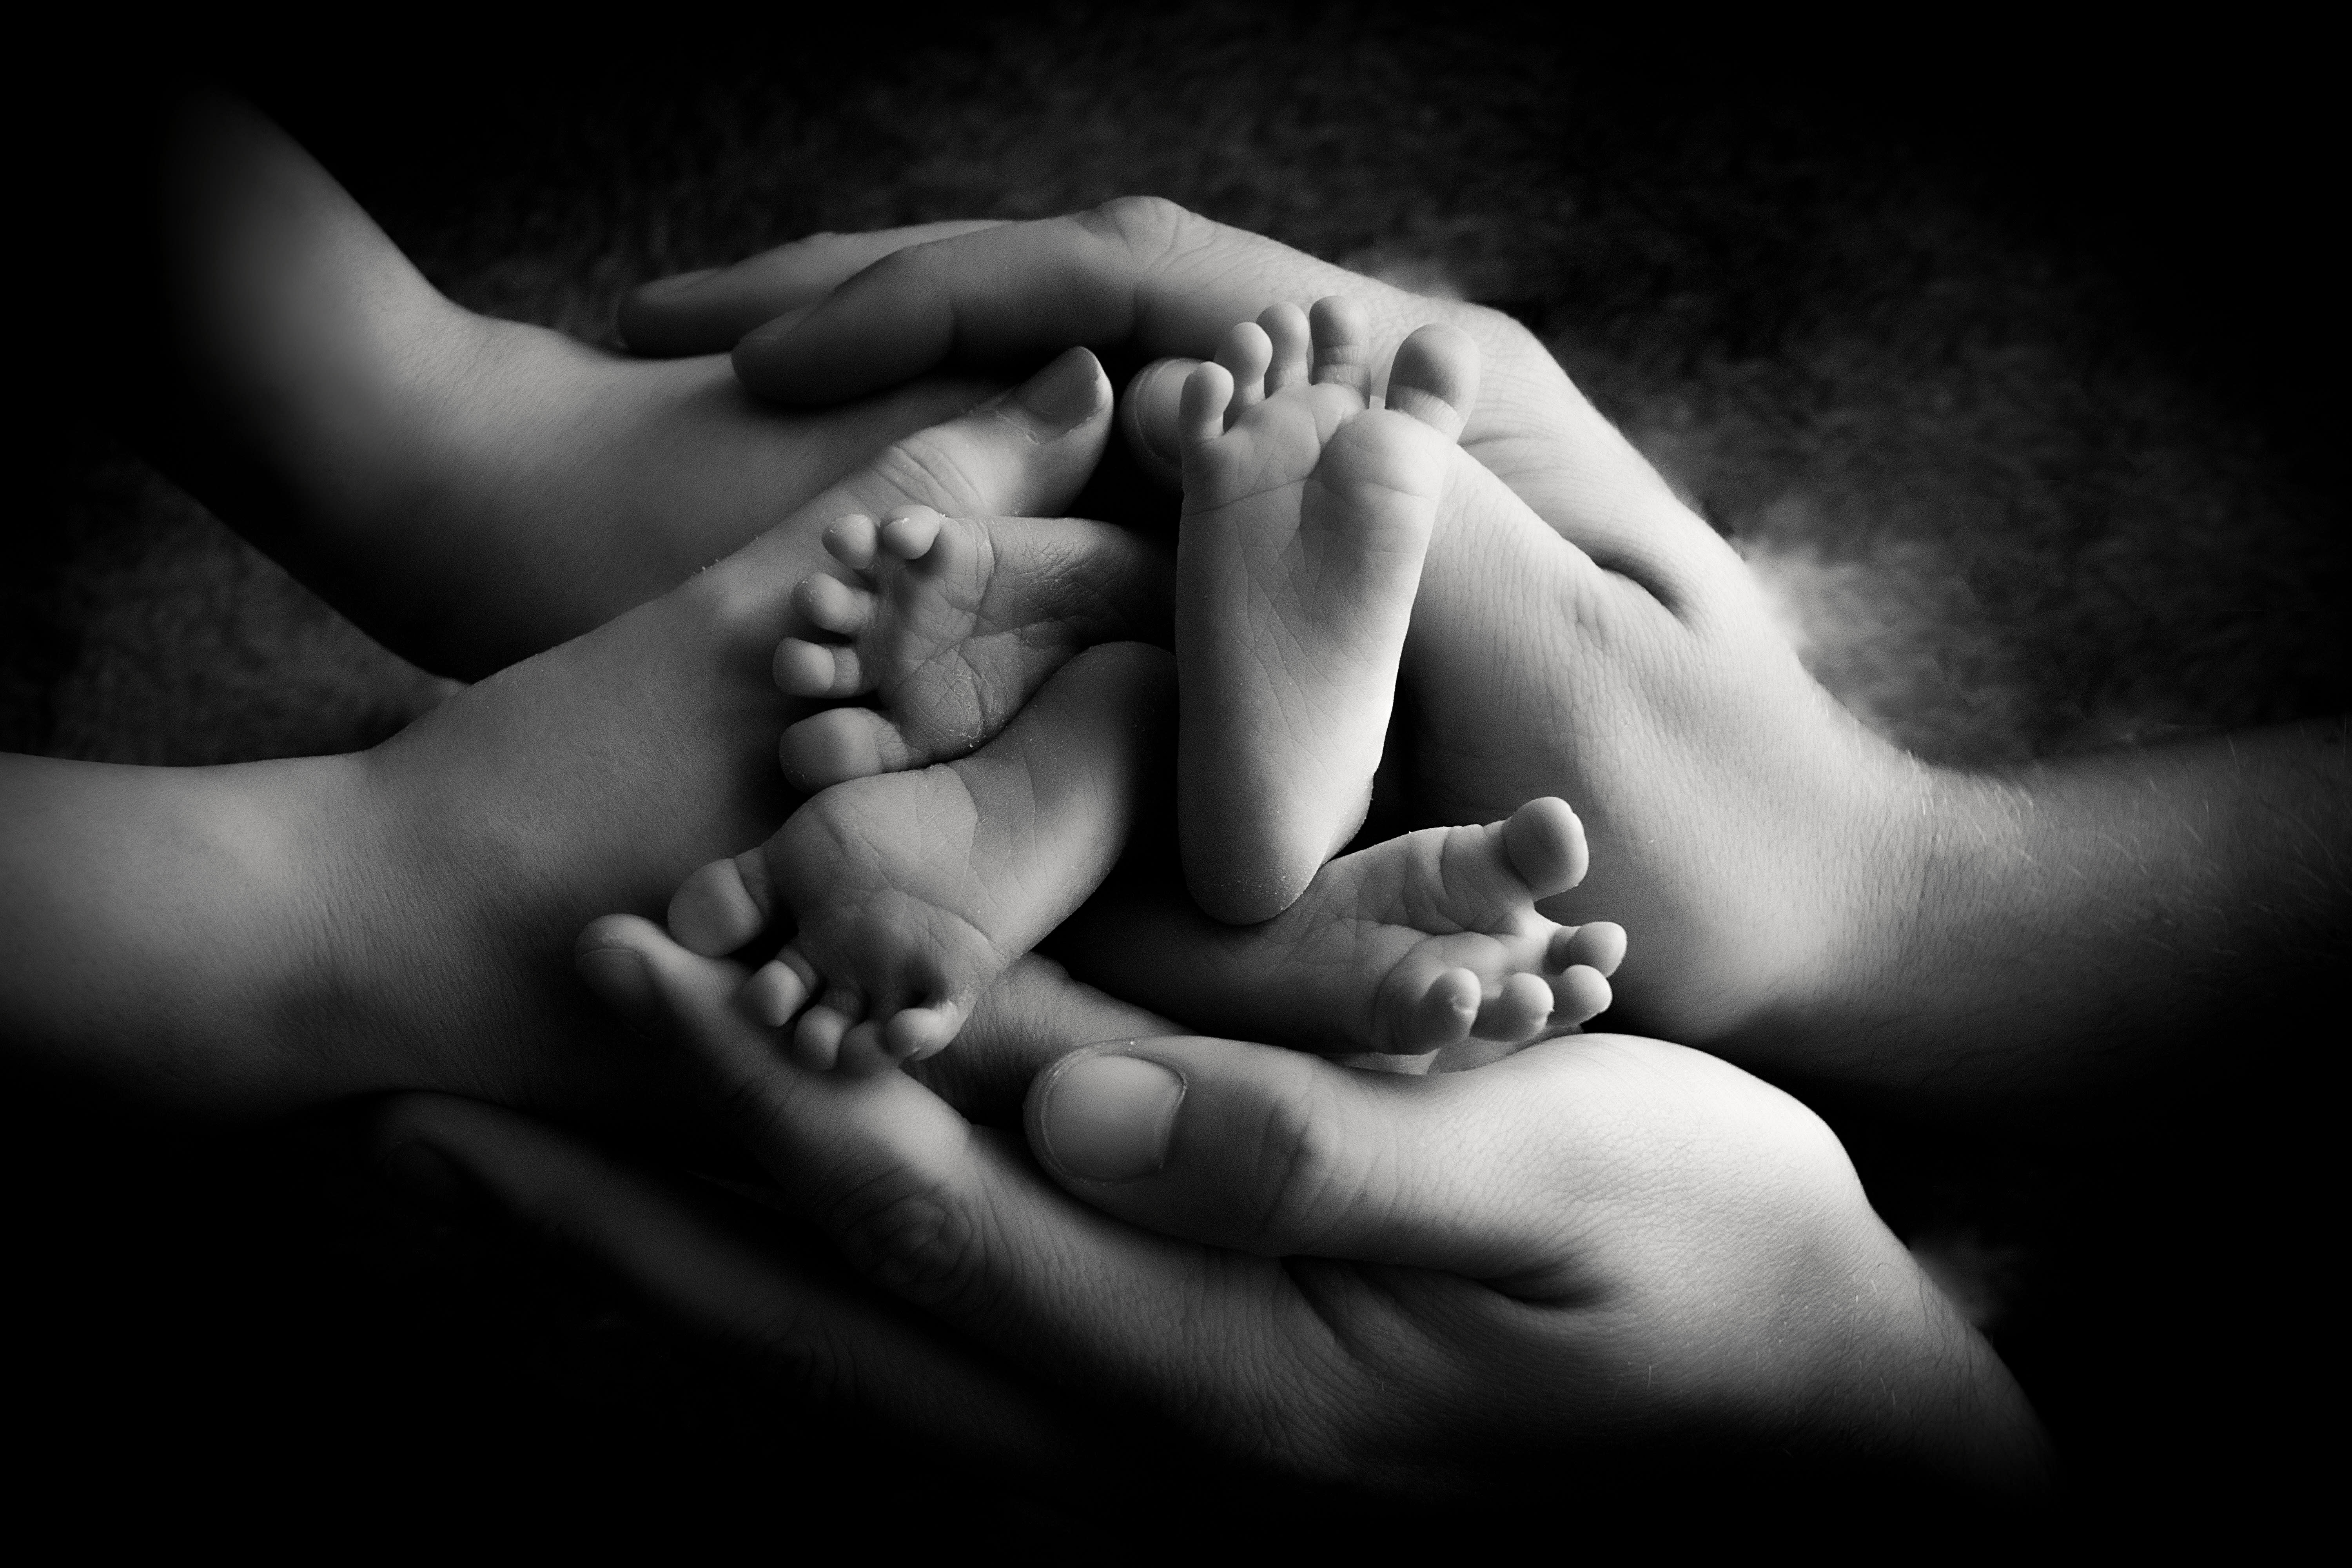 Celina, TX Maternity, Baby, and Newborn Photographer